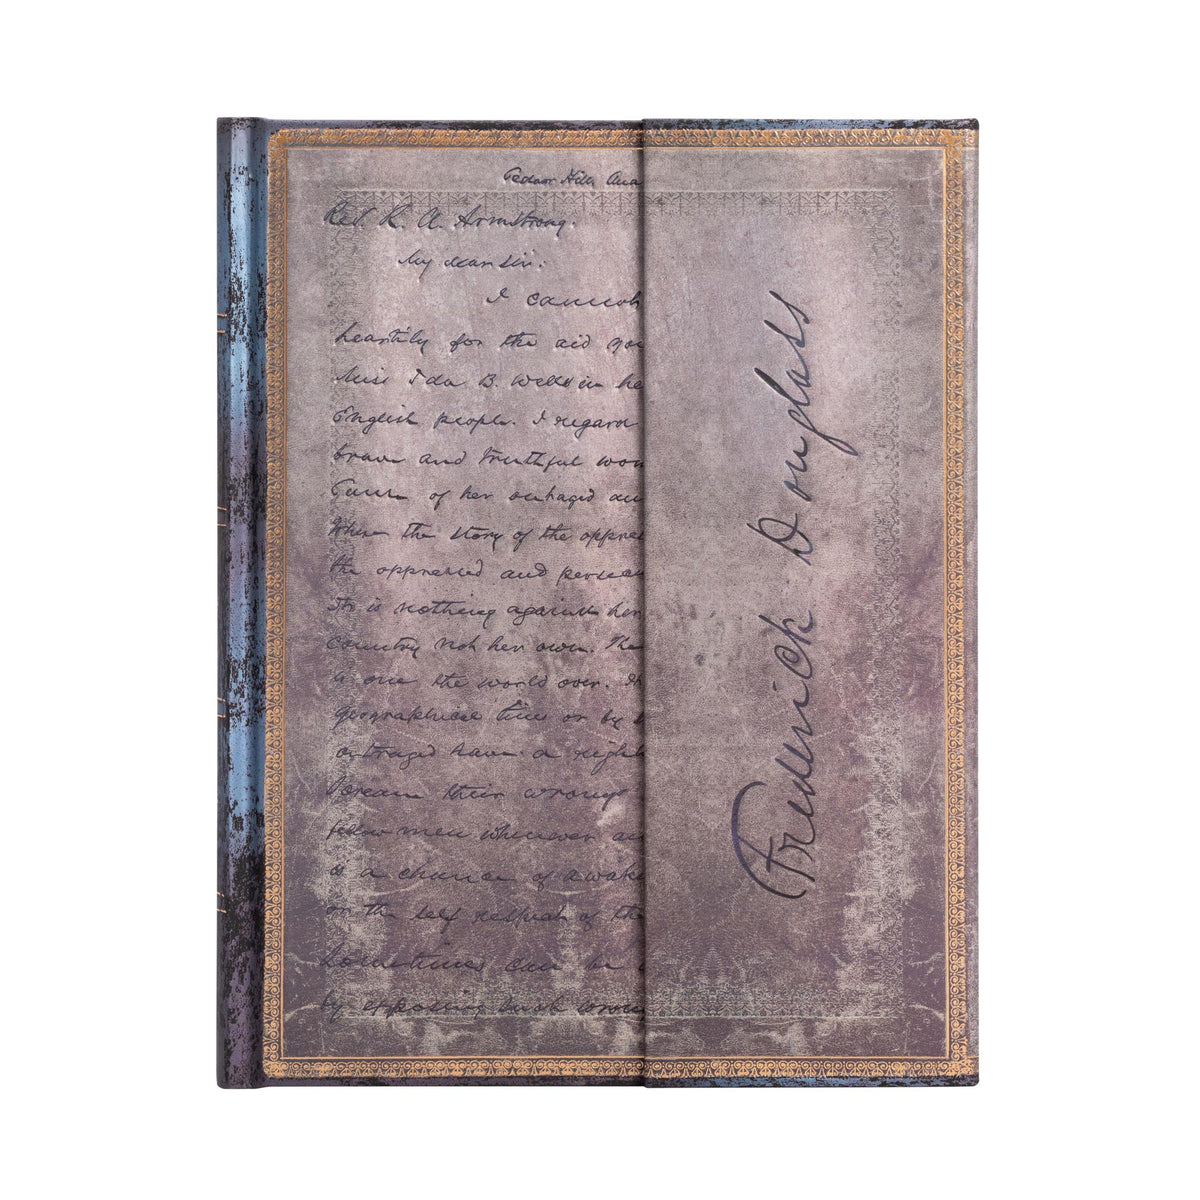 Paperblanks Embellished Manuscripts - Fredrick Douglass, Letter for Civil Rights Ultra Wrap